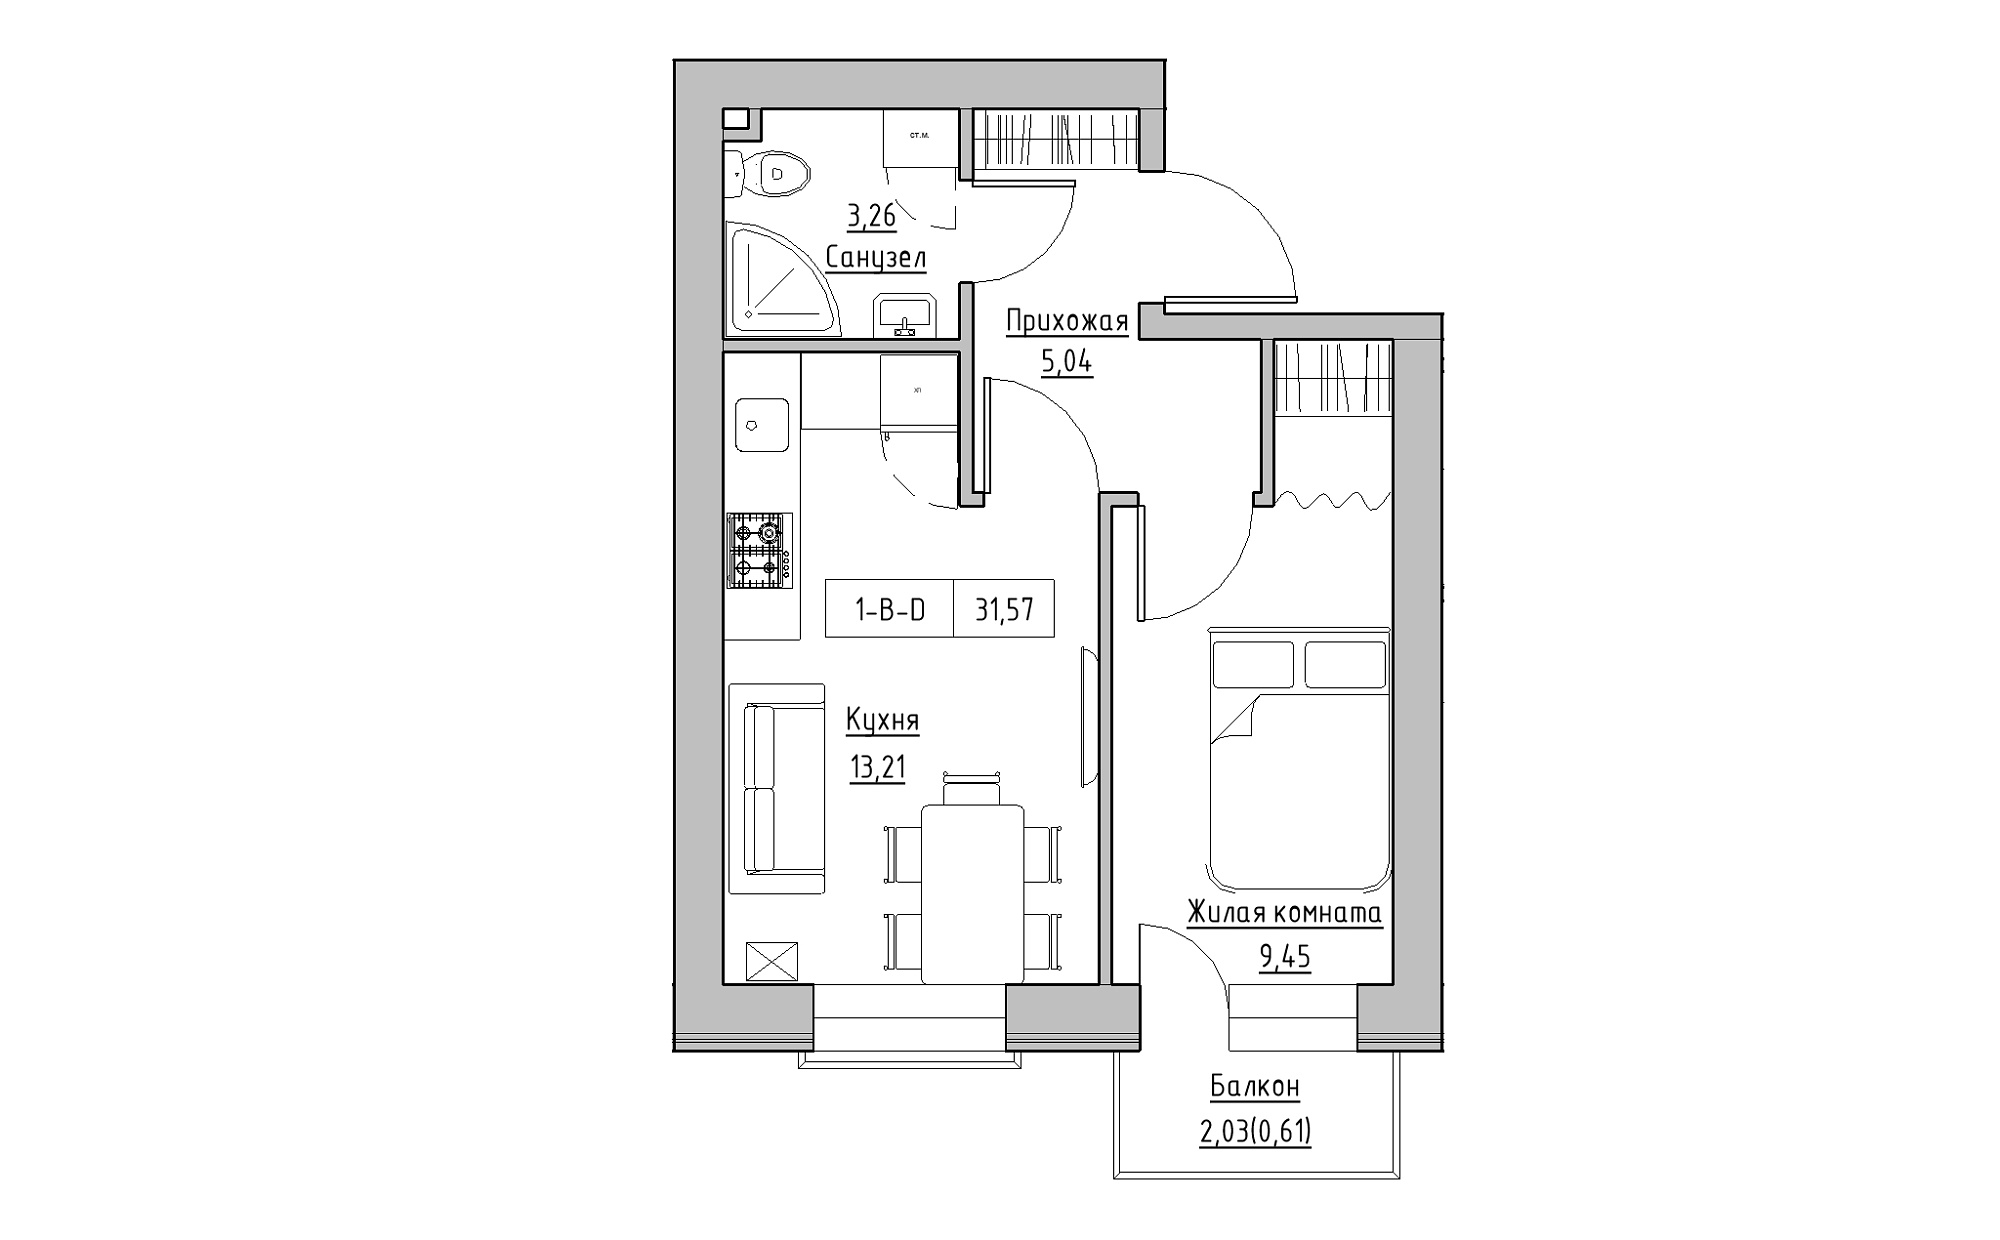 Planning 1-rm flats area 31.57m2, KS-022-04/0003.